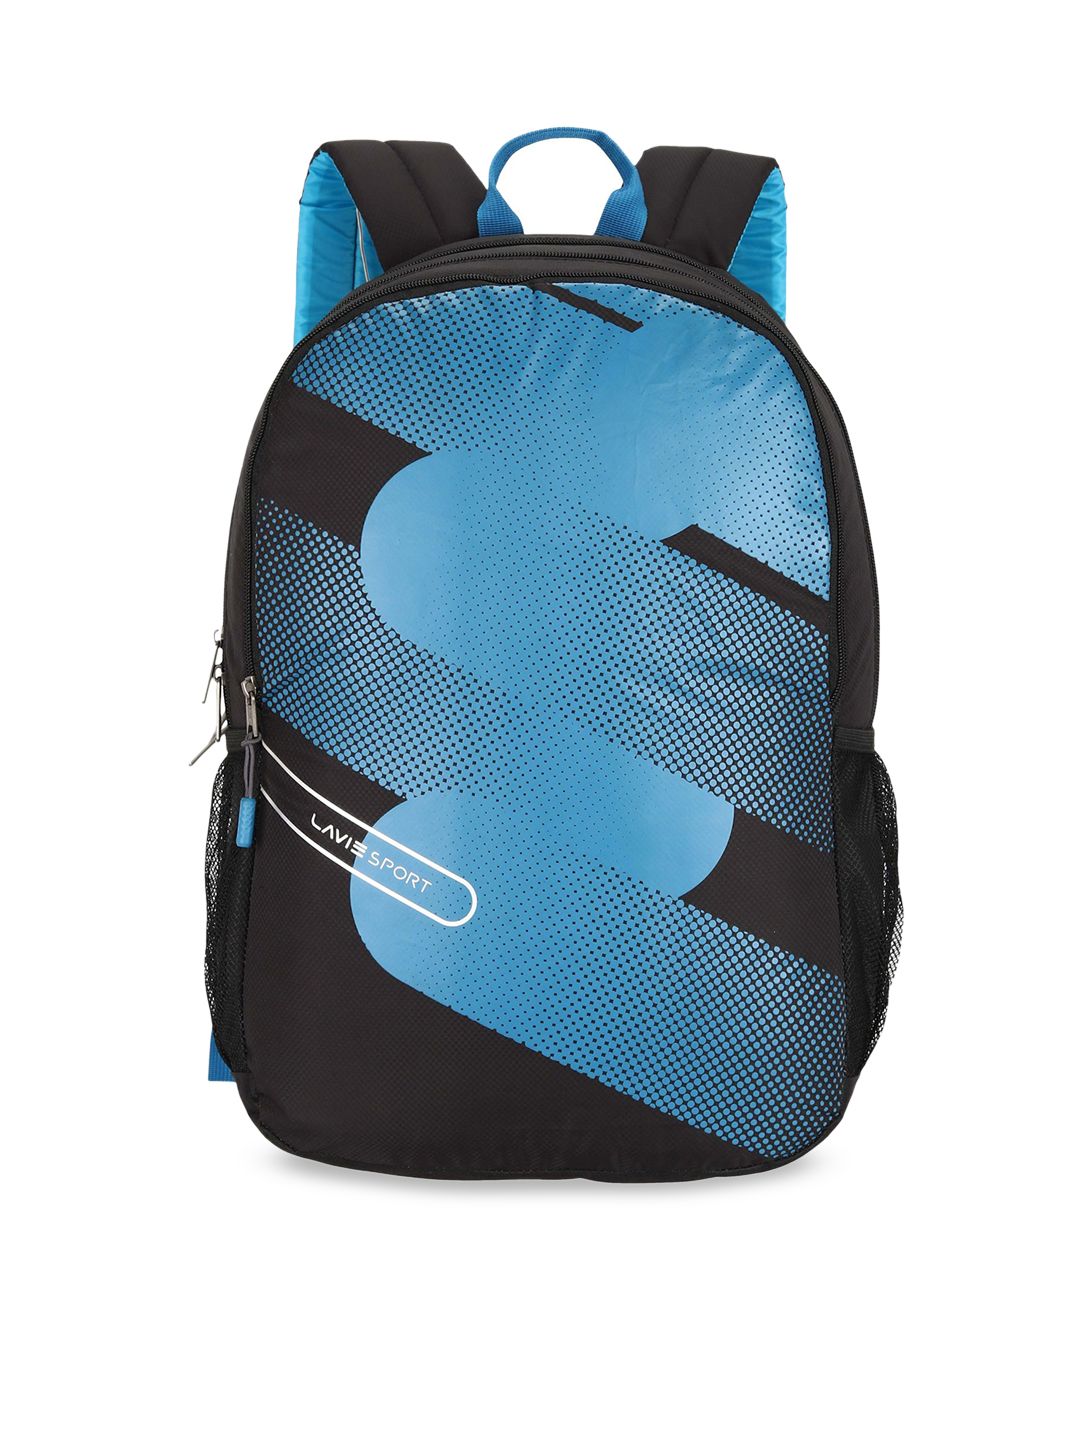 LAVIE SPORT Unisex Black & Blue Graphic Backpack Price in India